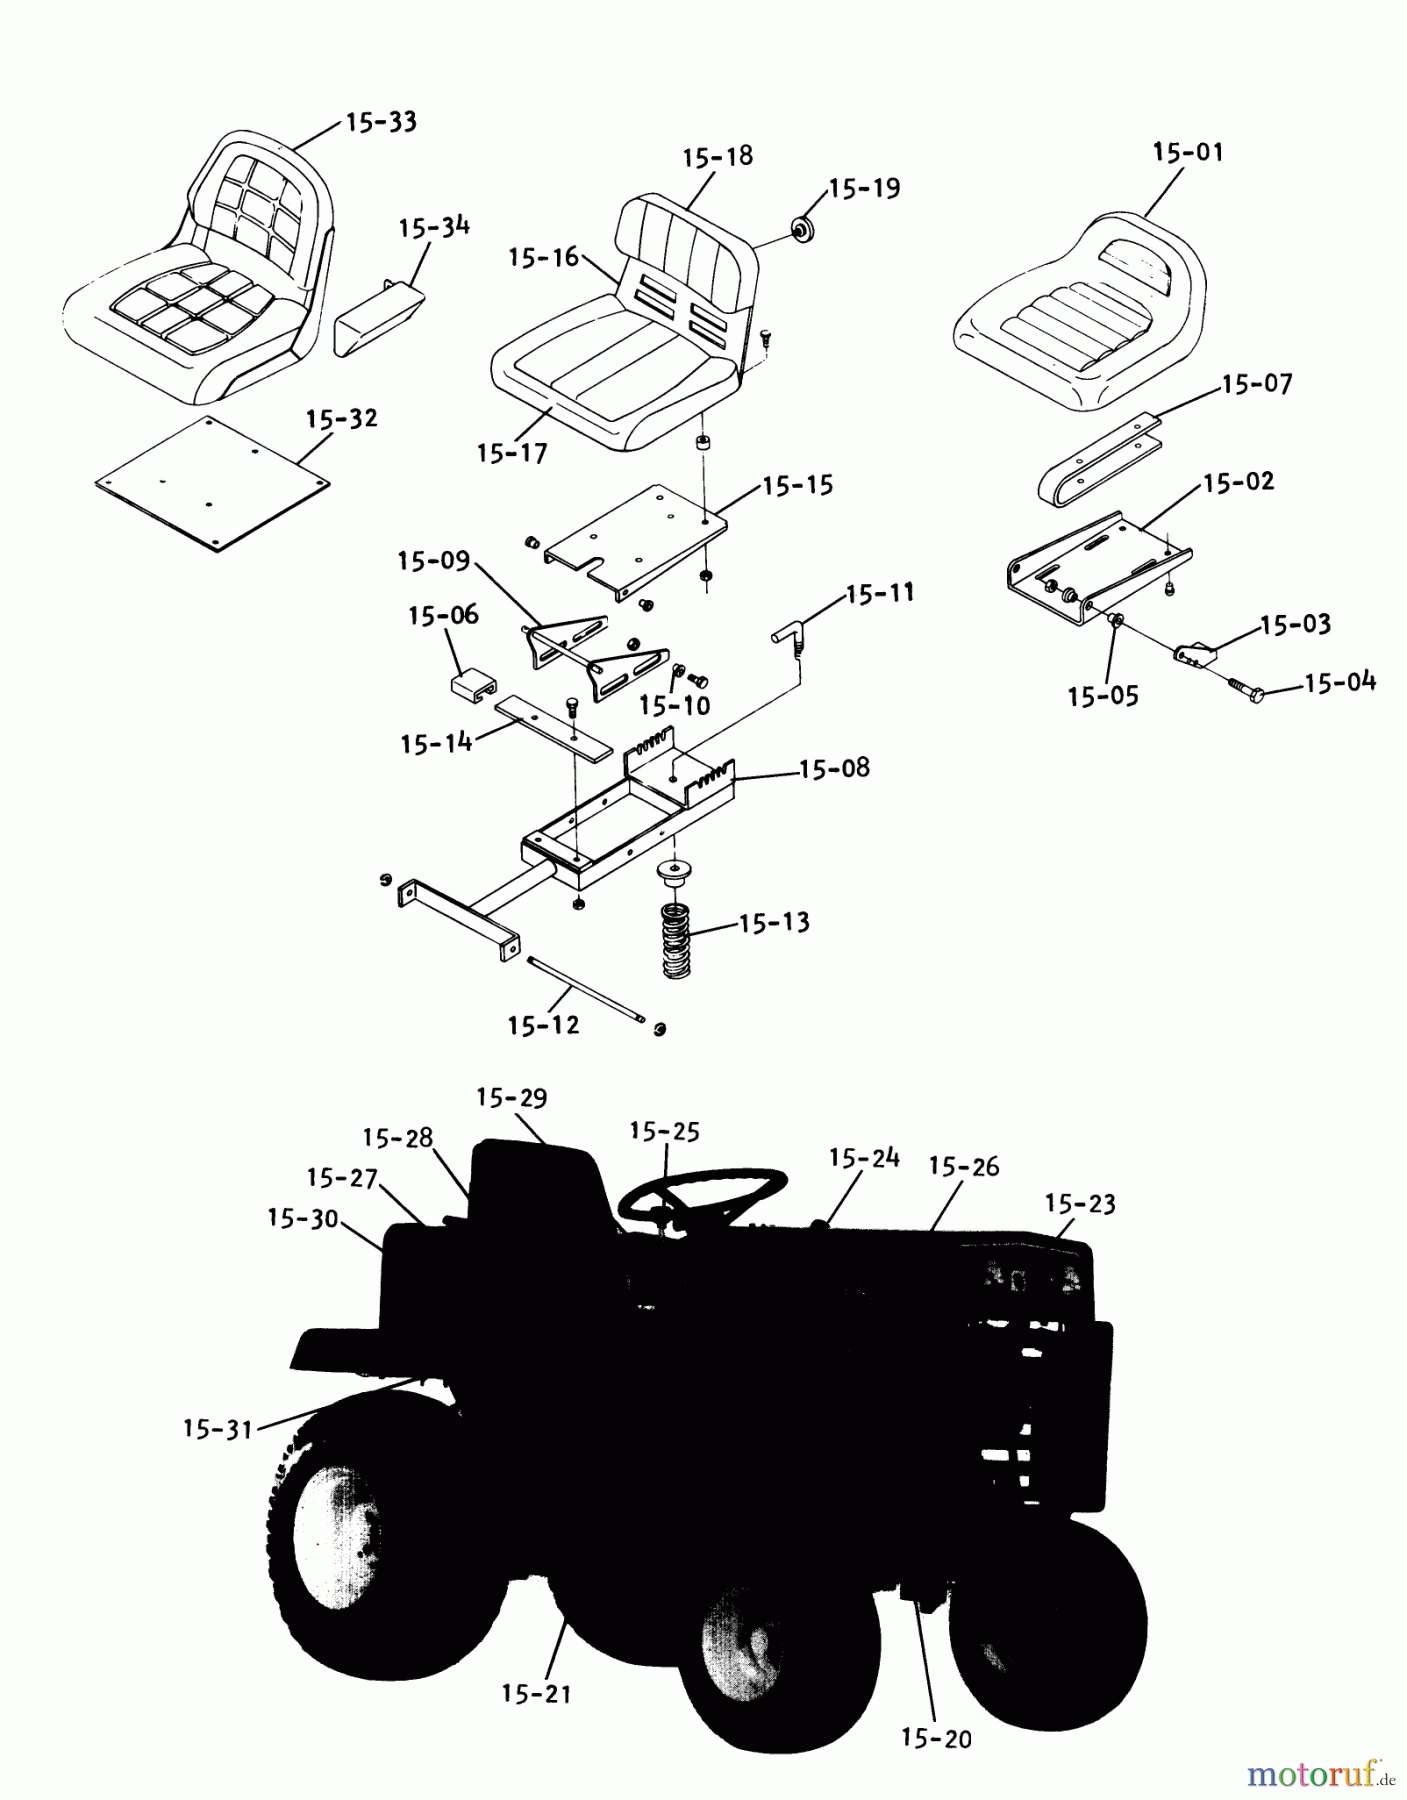  Toro Neu Mowers, Lawn & Garden Tractor Seite 1 1-0651 (D-160) - Toro D-160 Automatic Tractor, 1975 14.040 REAR POWER TAKE-OFF (FIG. 14B) #2